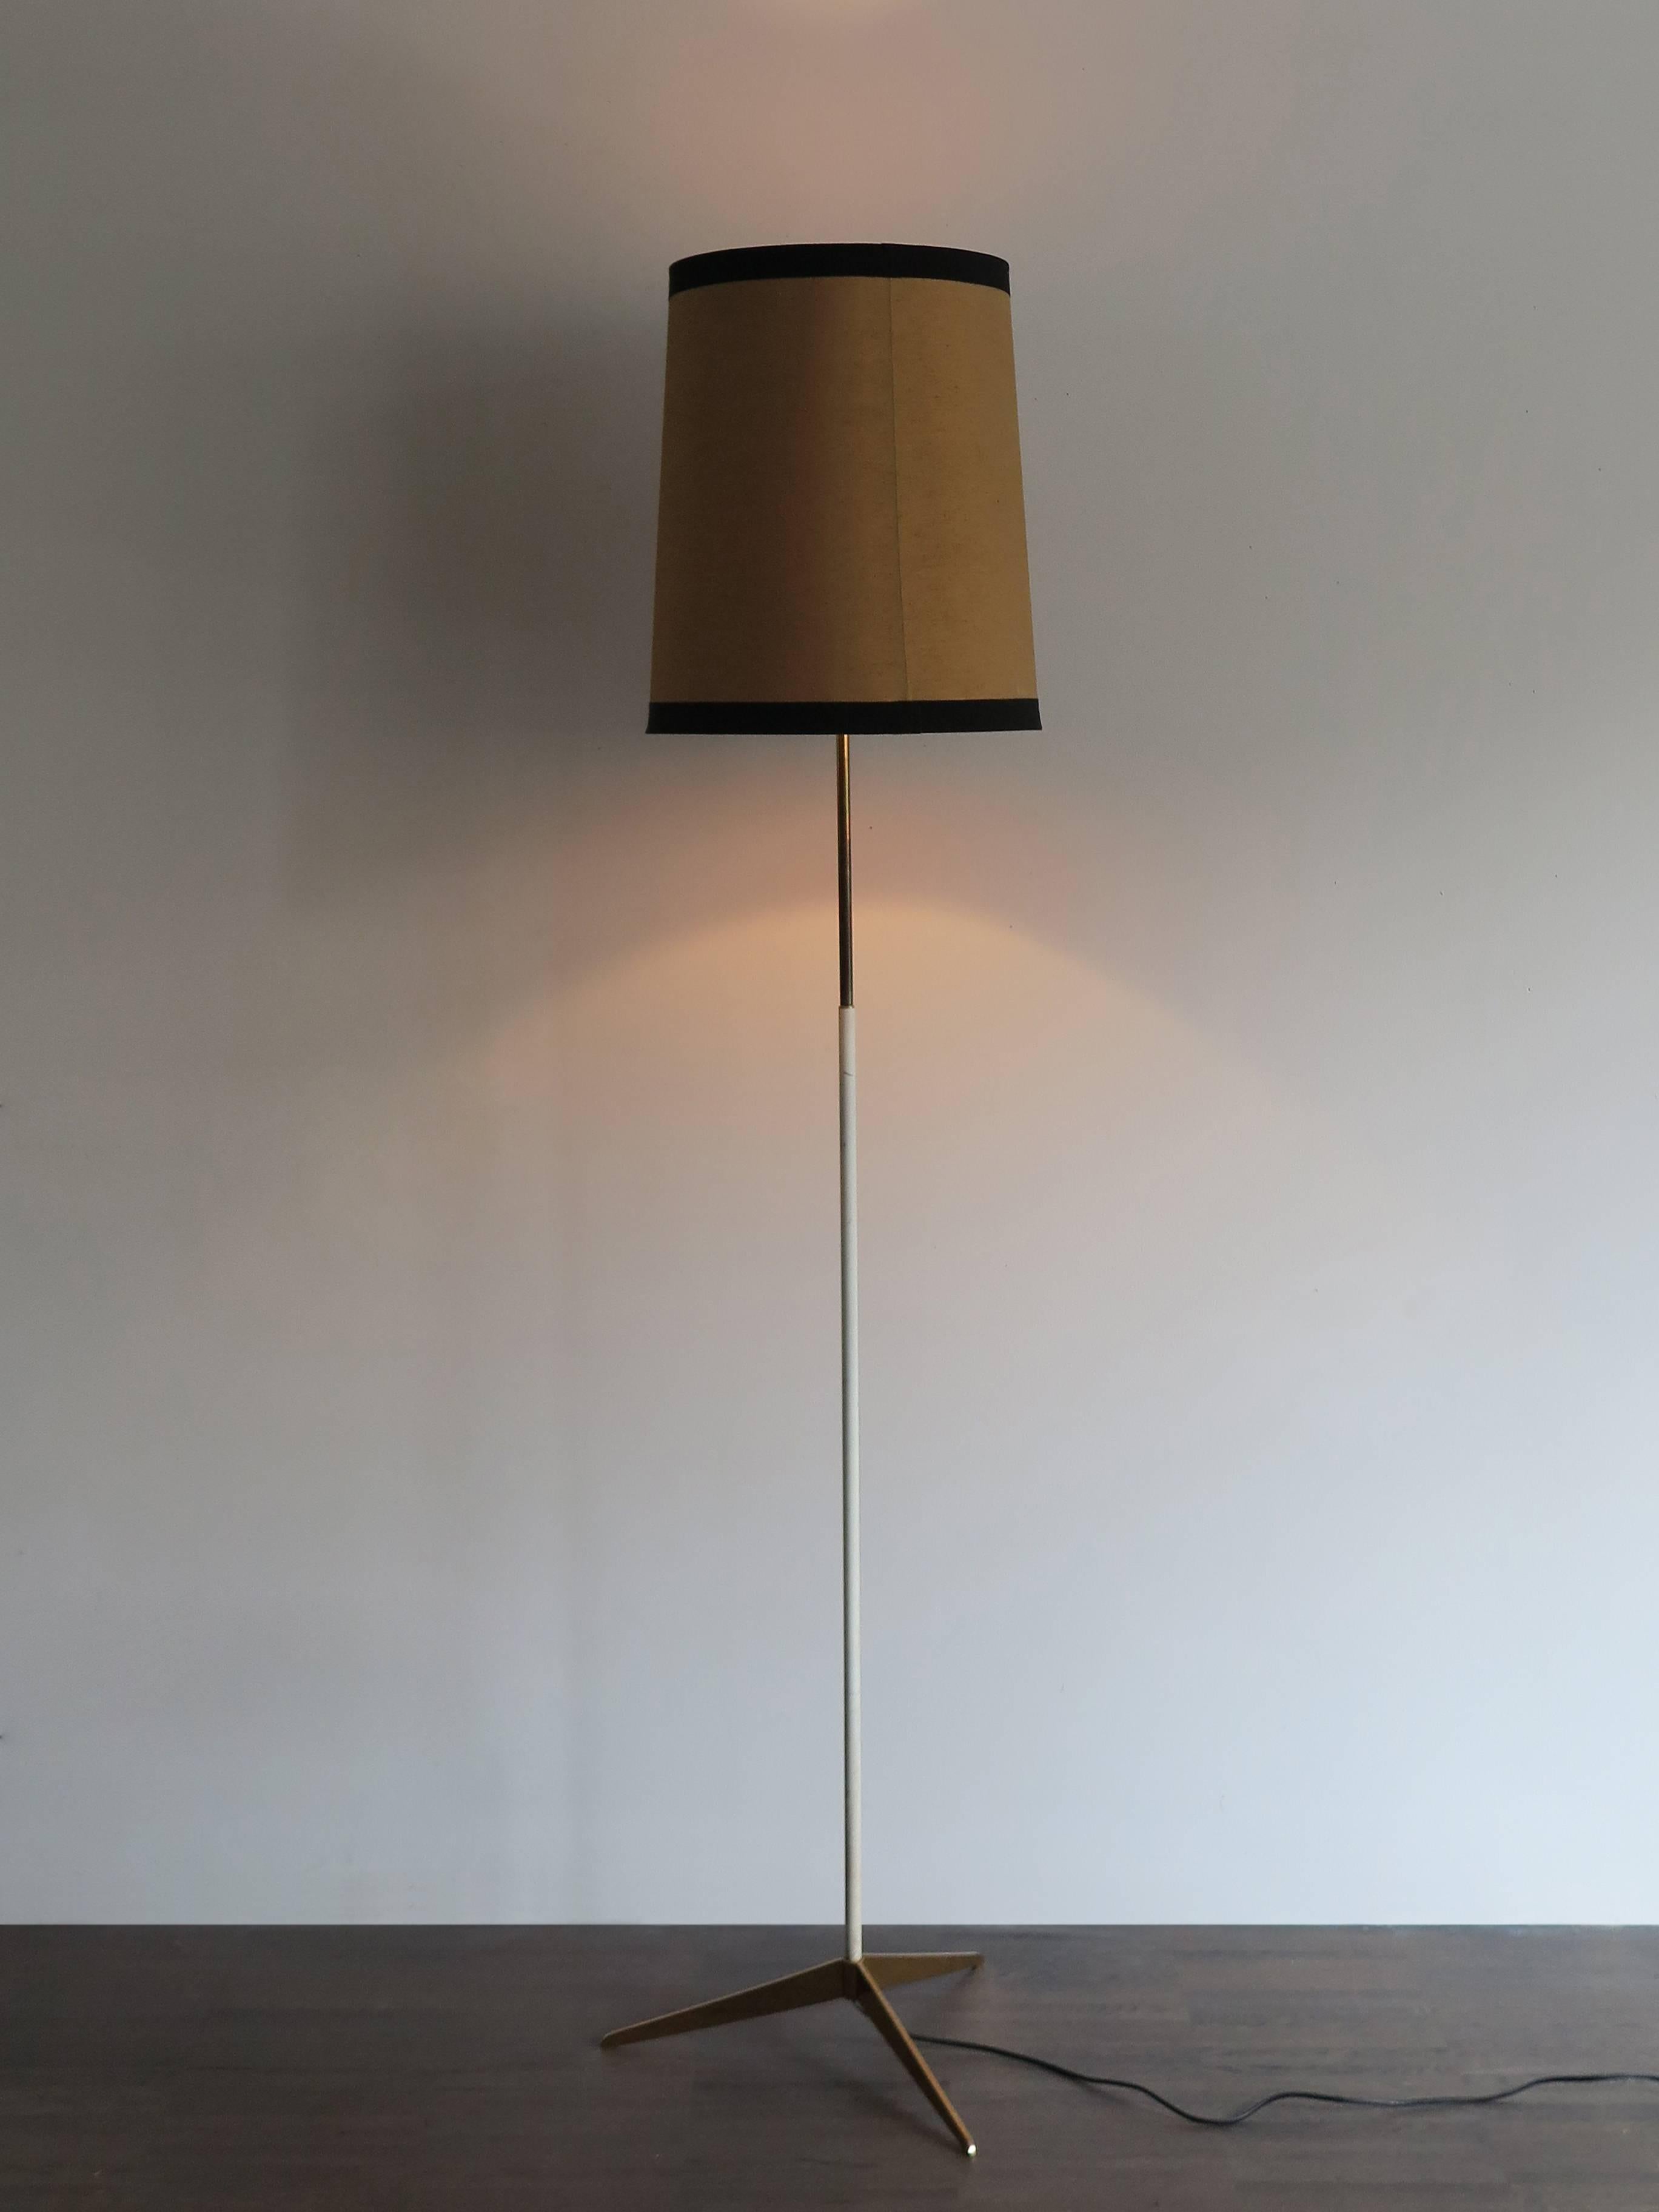 Italian Stilnovo Mid-Century Modern floor lamp with brass base, original fabric shade
and manufacturing label, circa 1950s.